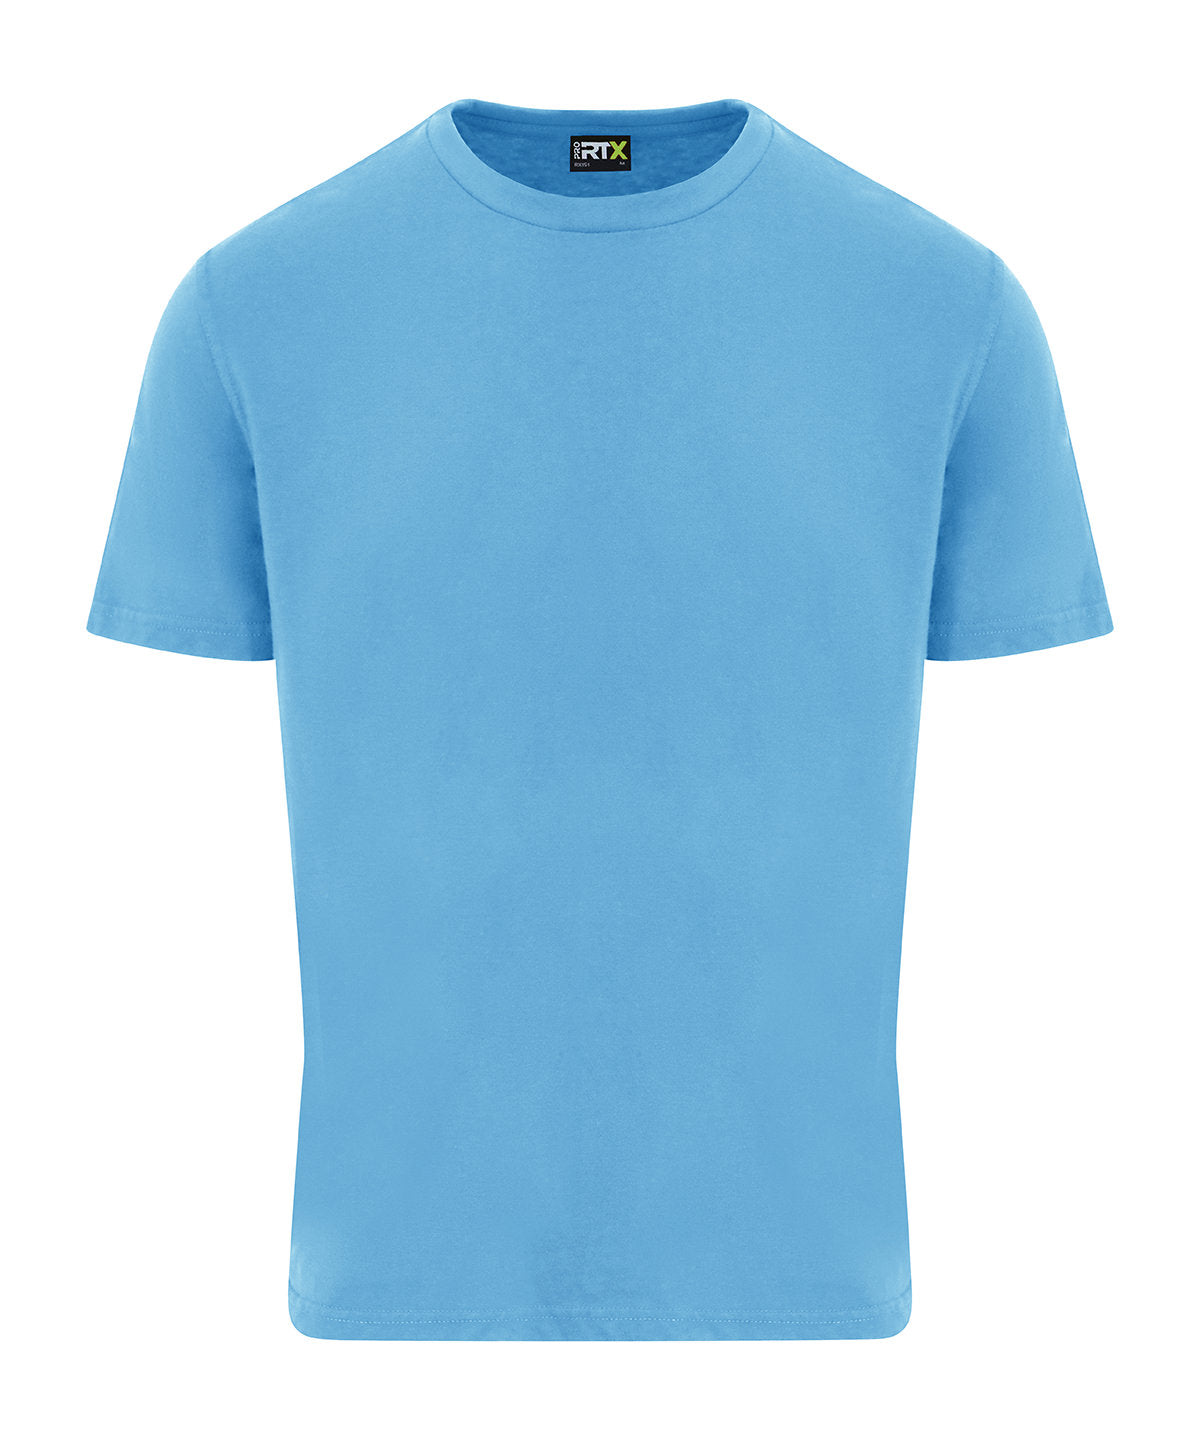 ProRTX Pro t-shirt Sky Blue